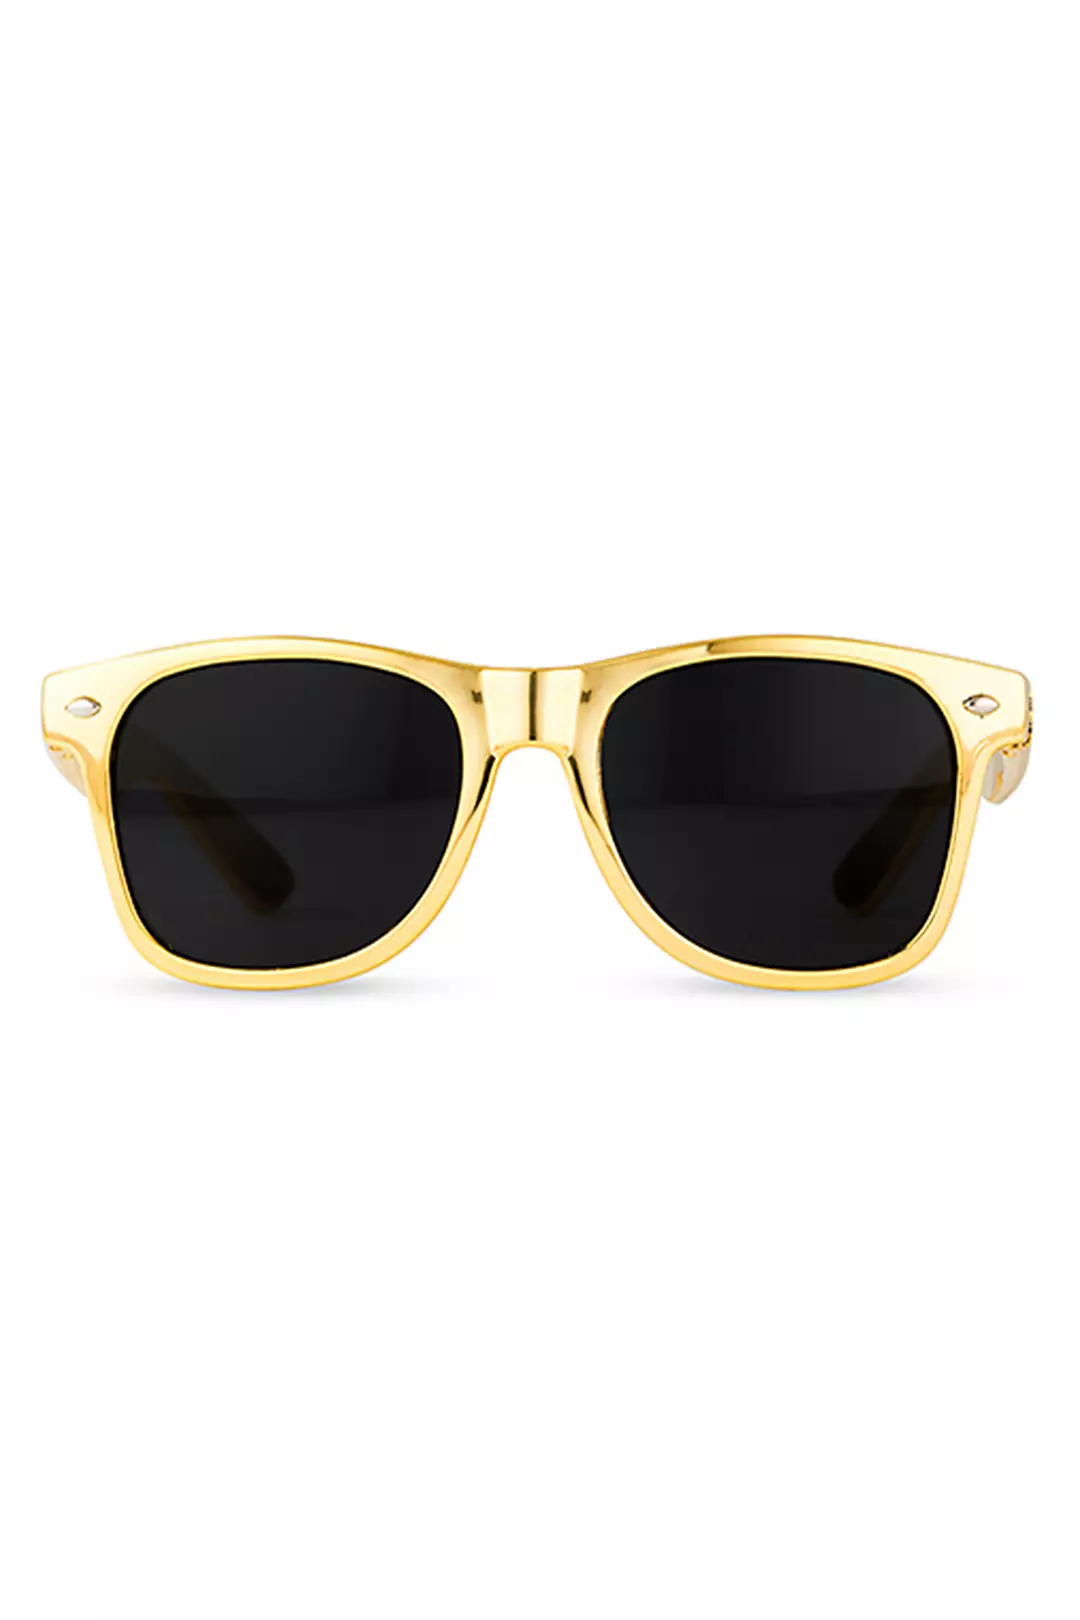 Personalized Metallic Gold Favor Sunglasses Image